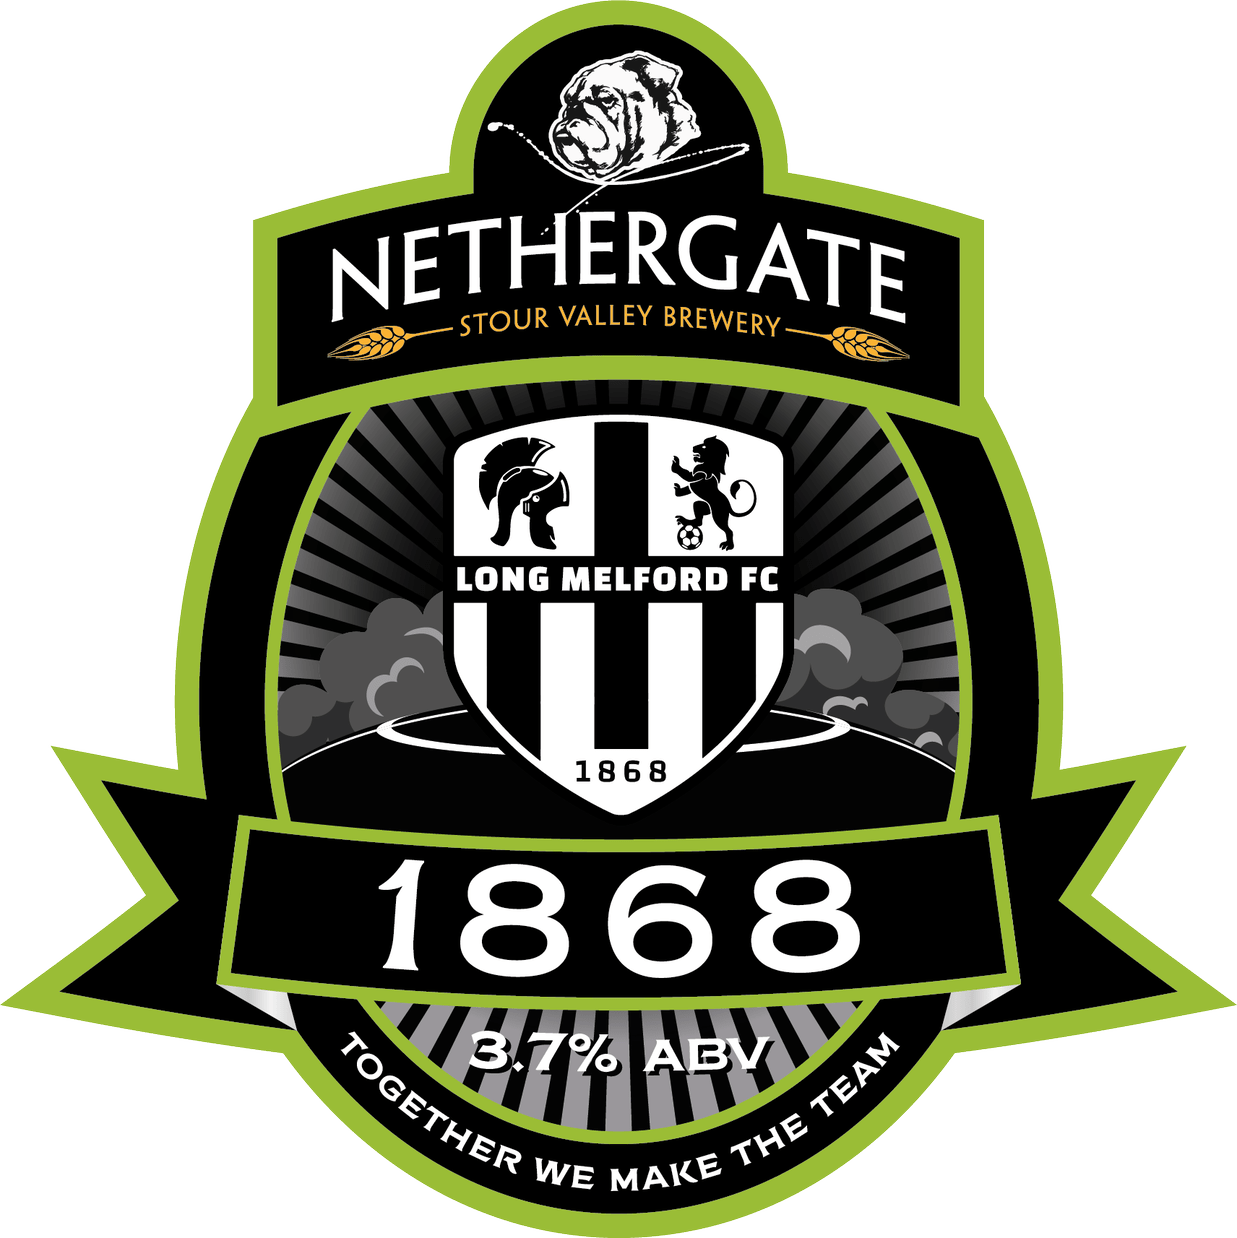 Long Melford FC Nethergate Beer